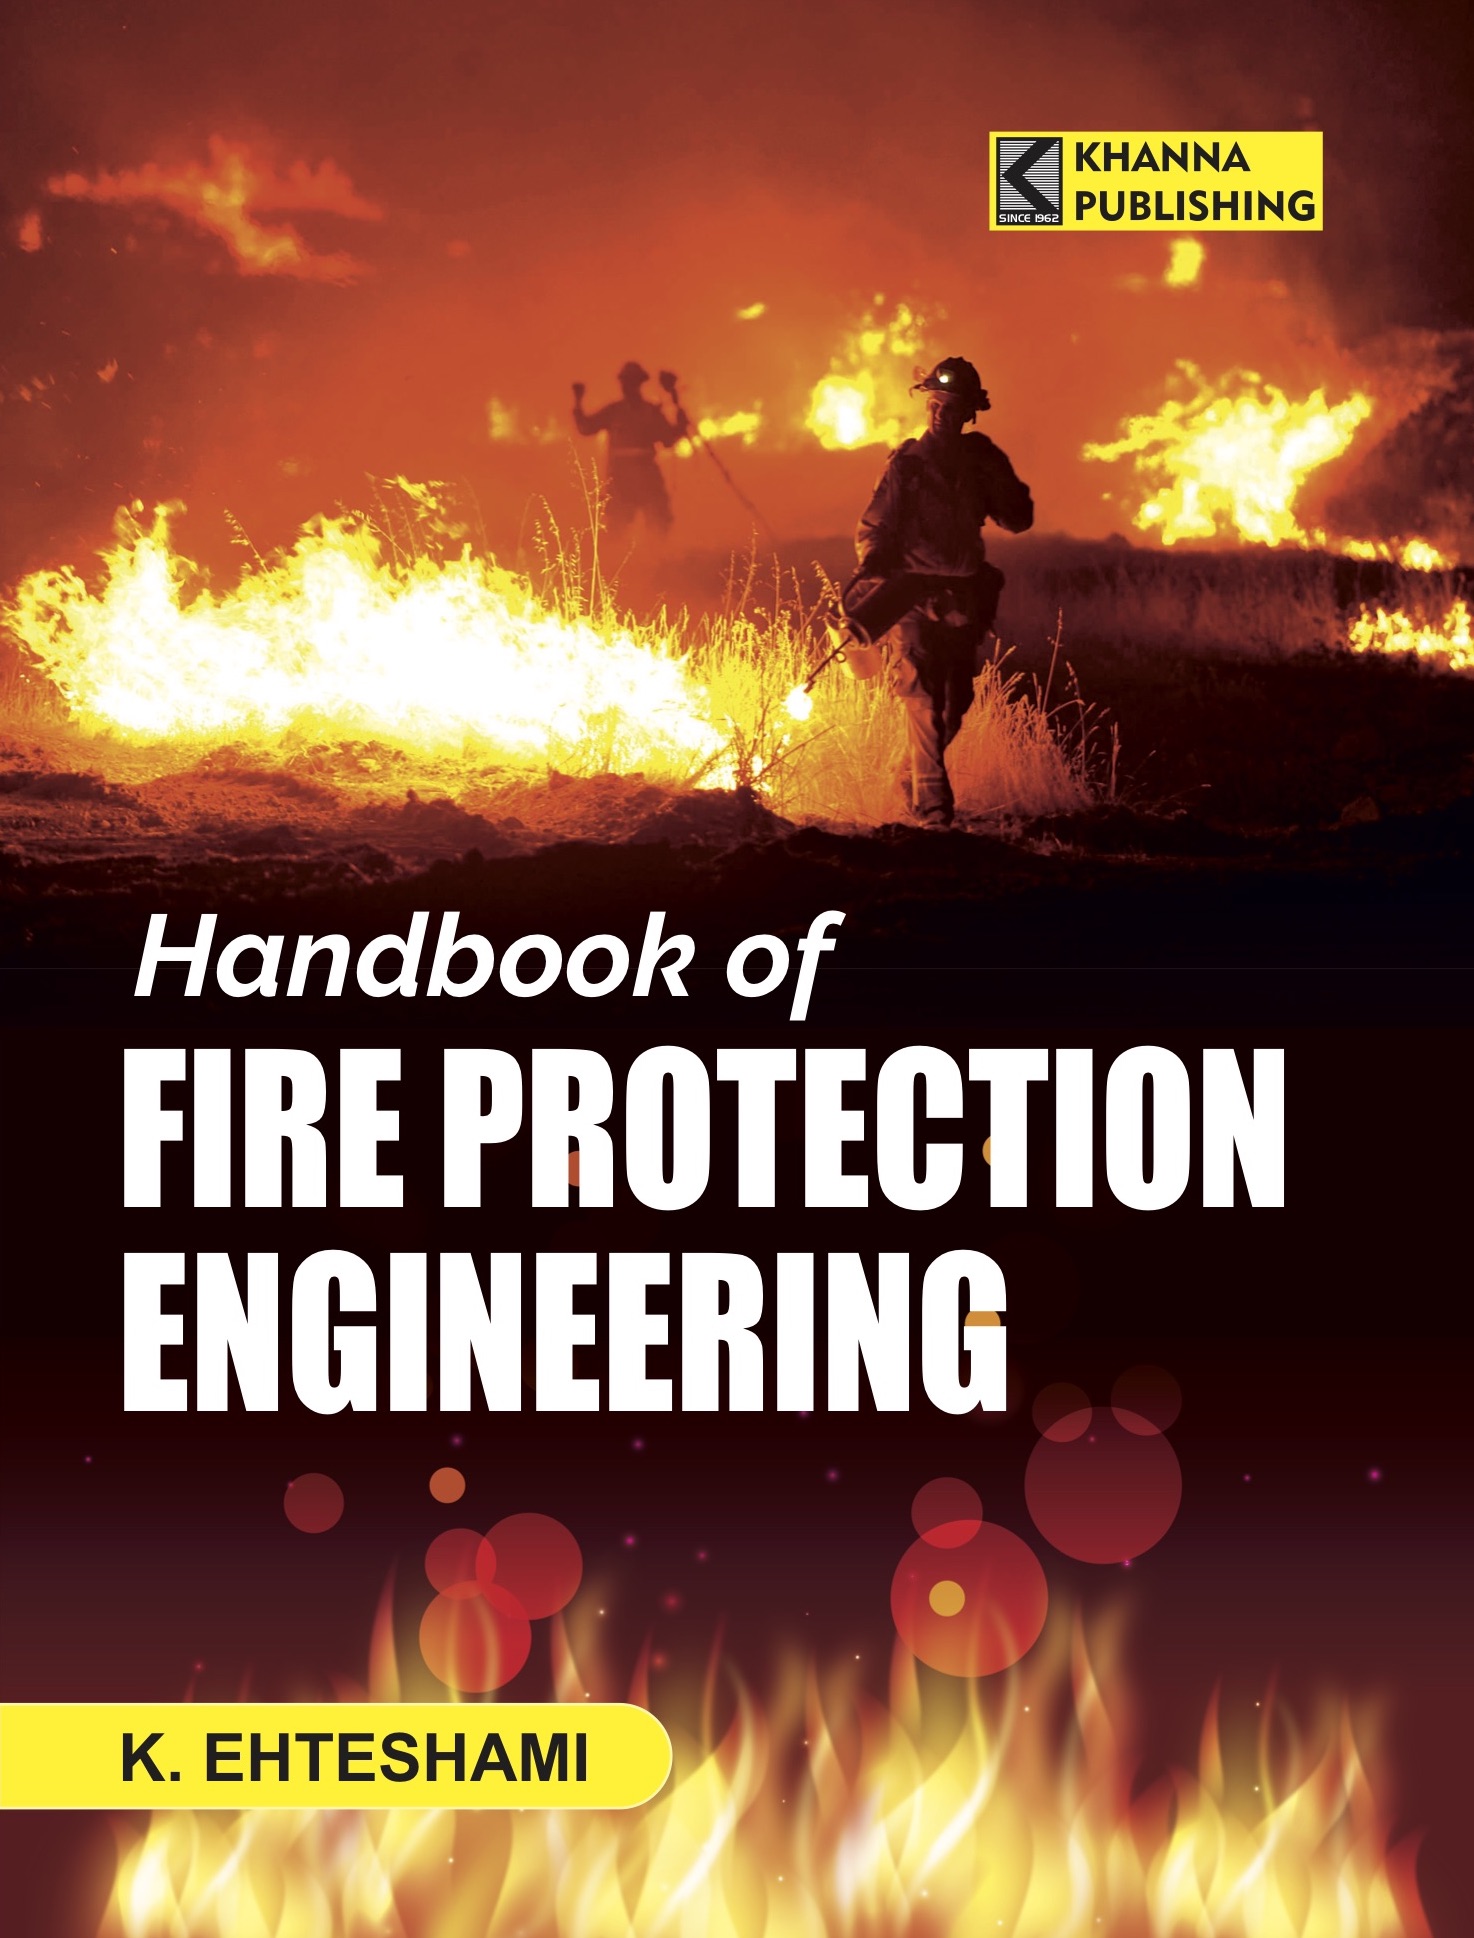 Handbook of Fire Protection Engineering